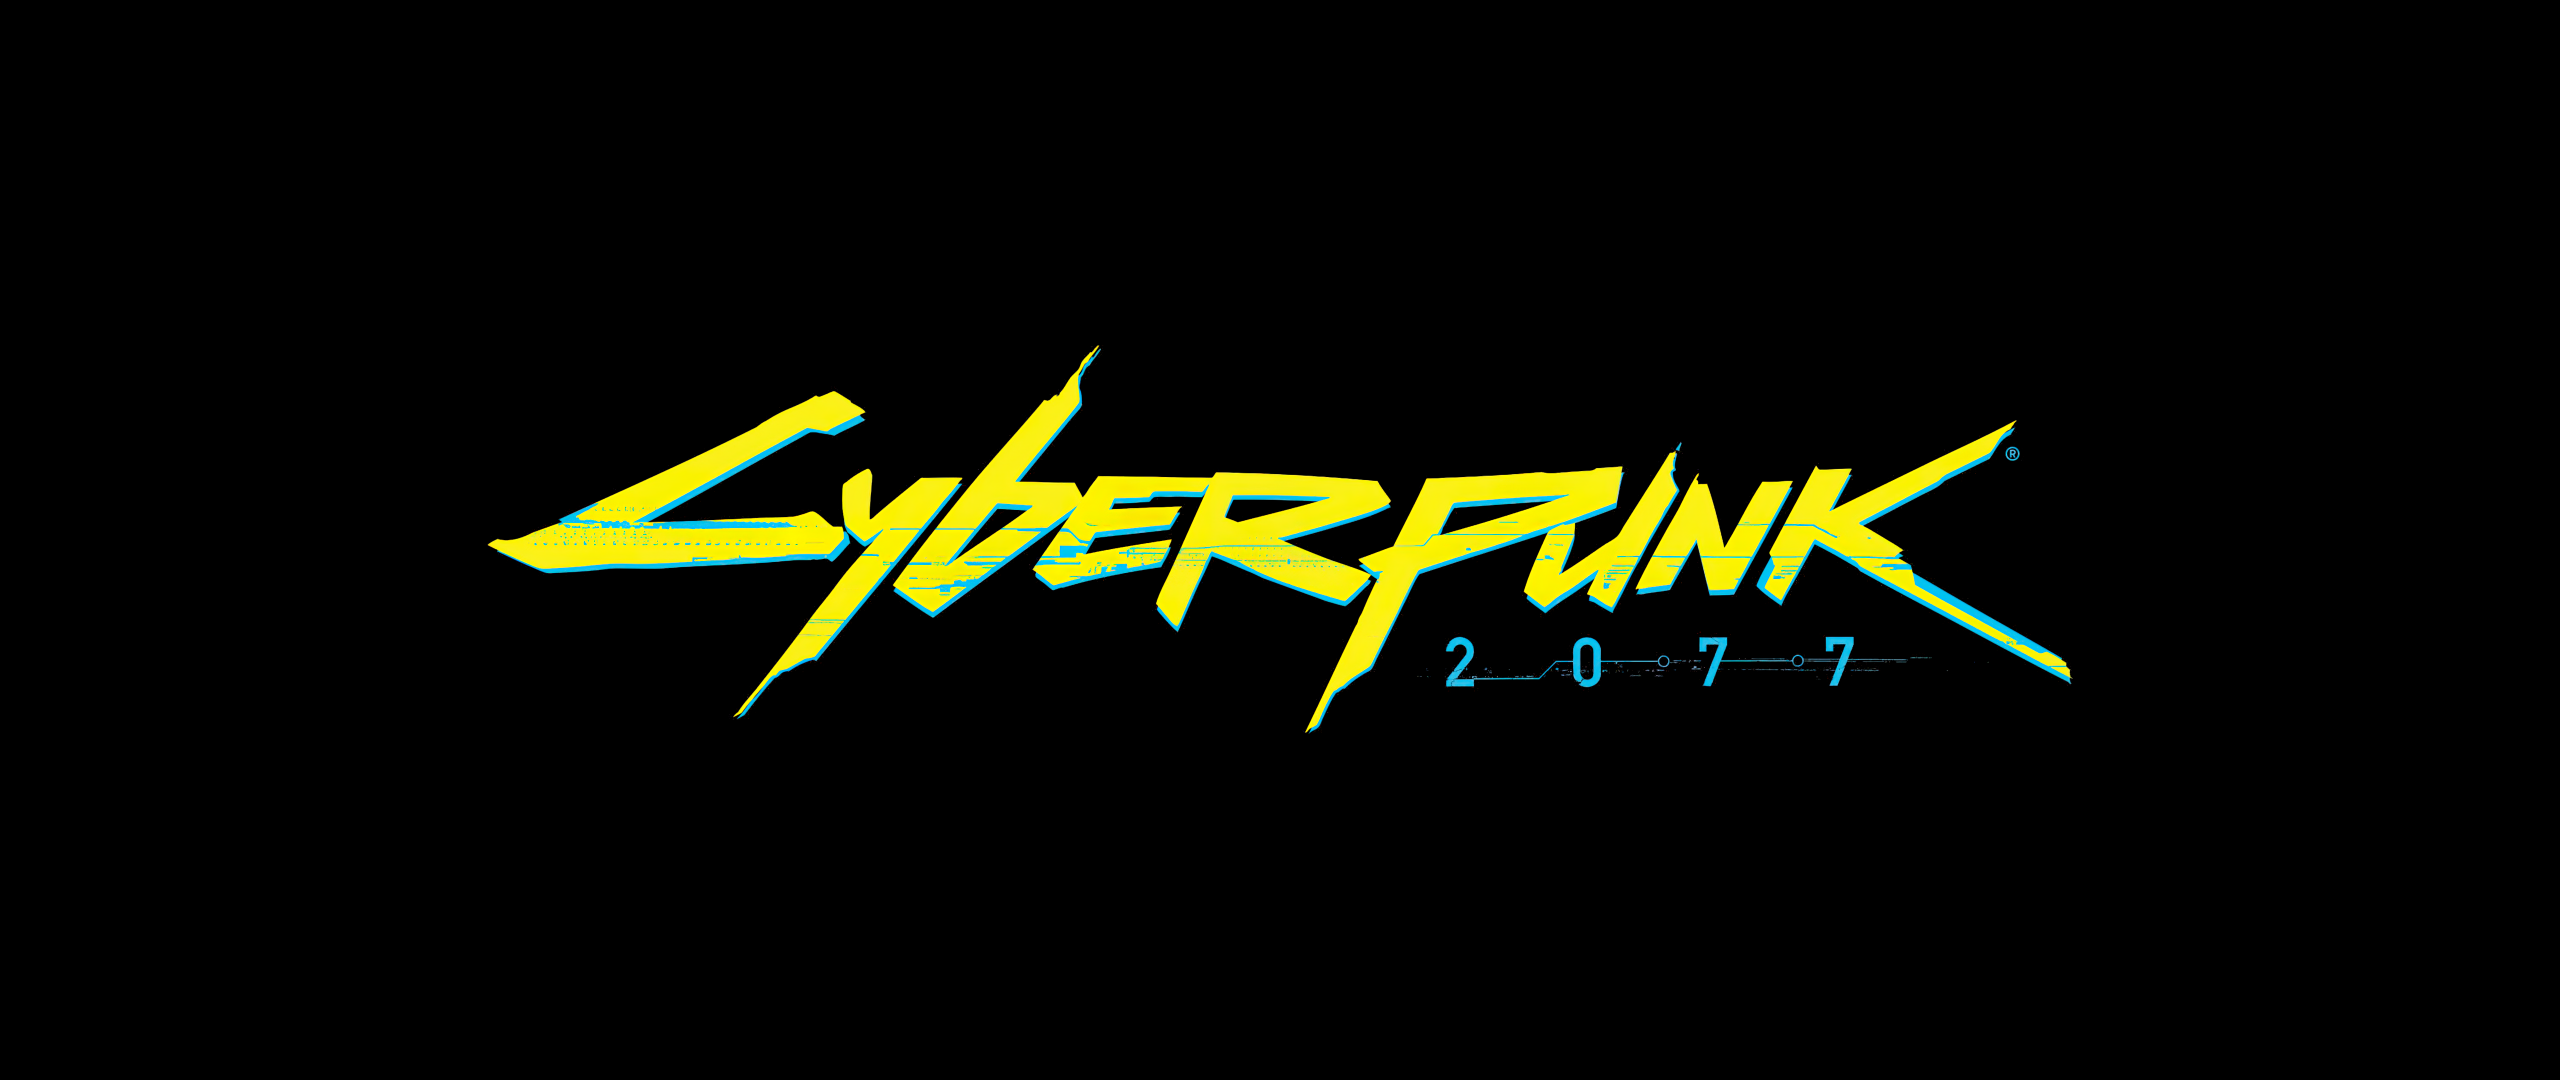 Cyberpunk logo effect фото 74